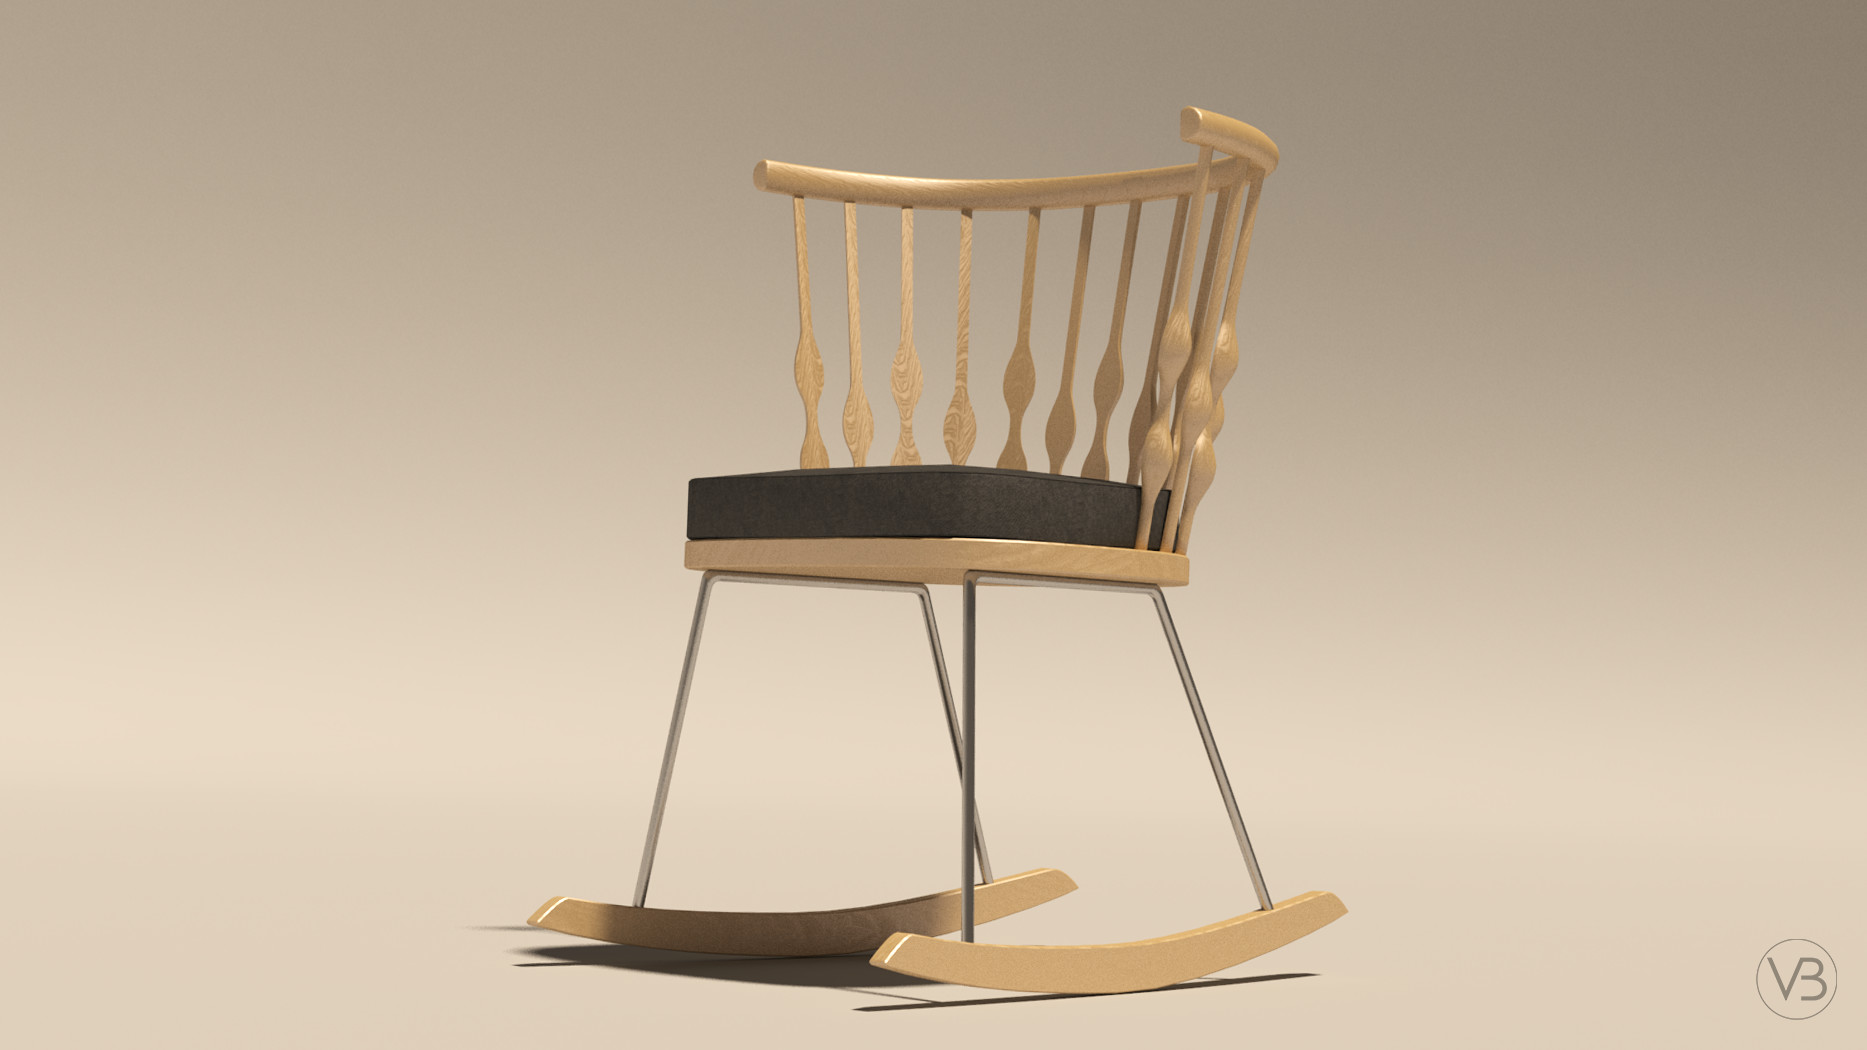 ArtStation - 3D model designer patricia urquiola chair